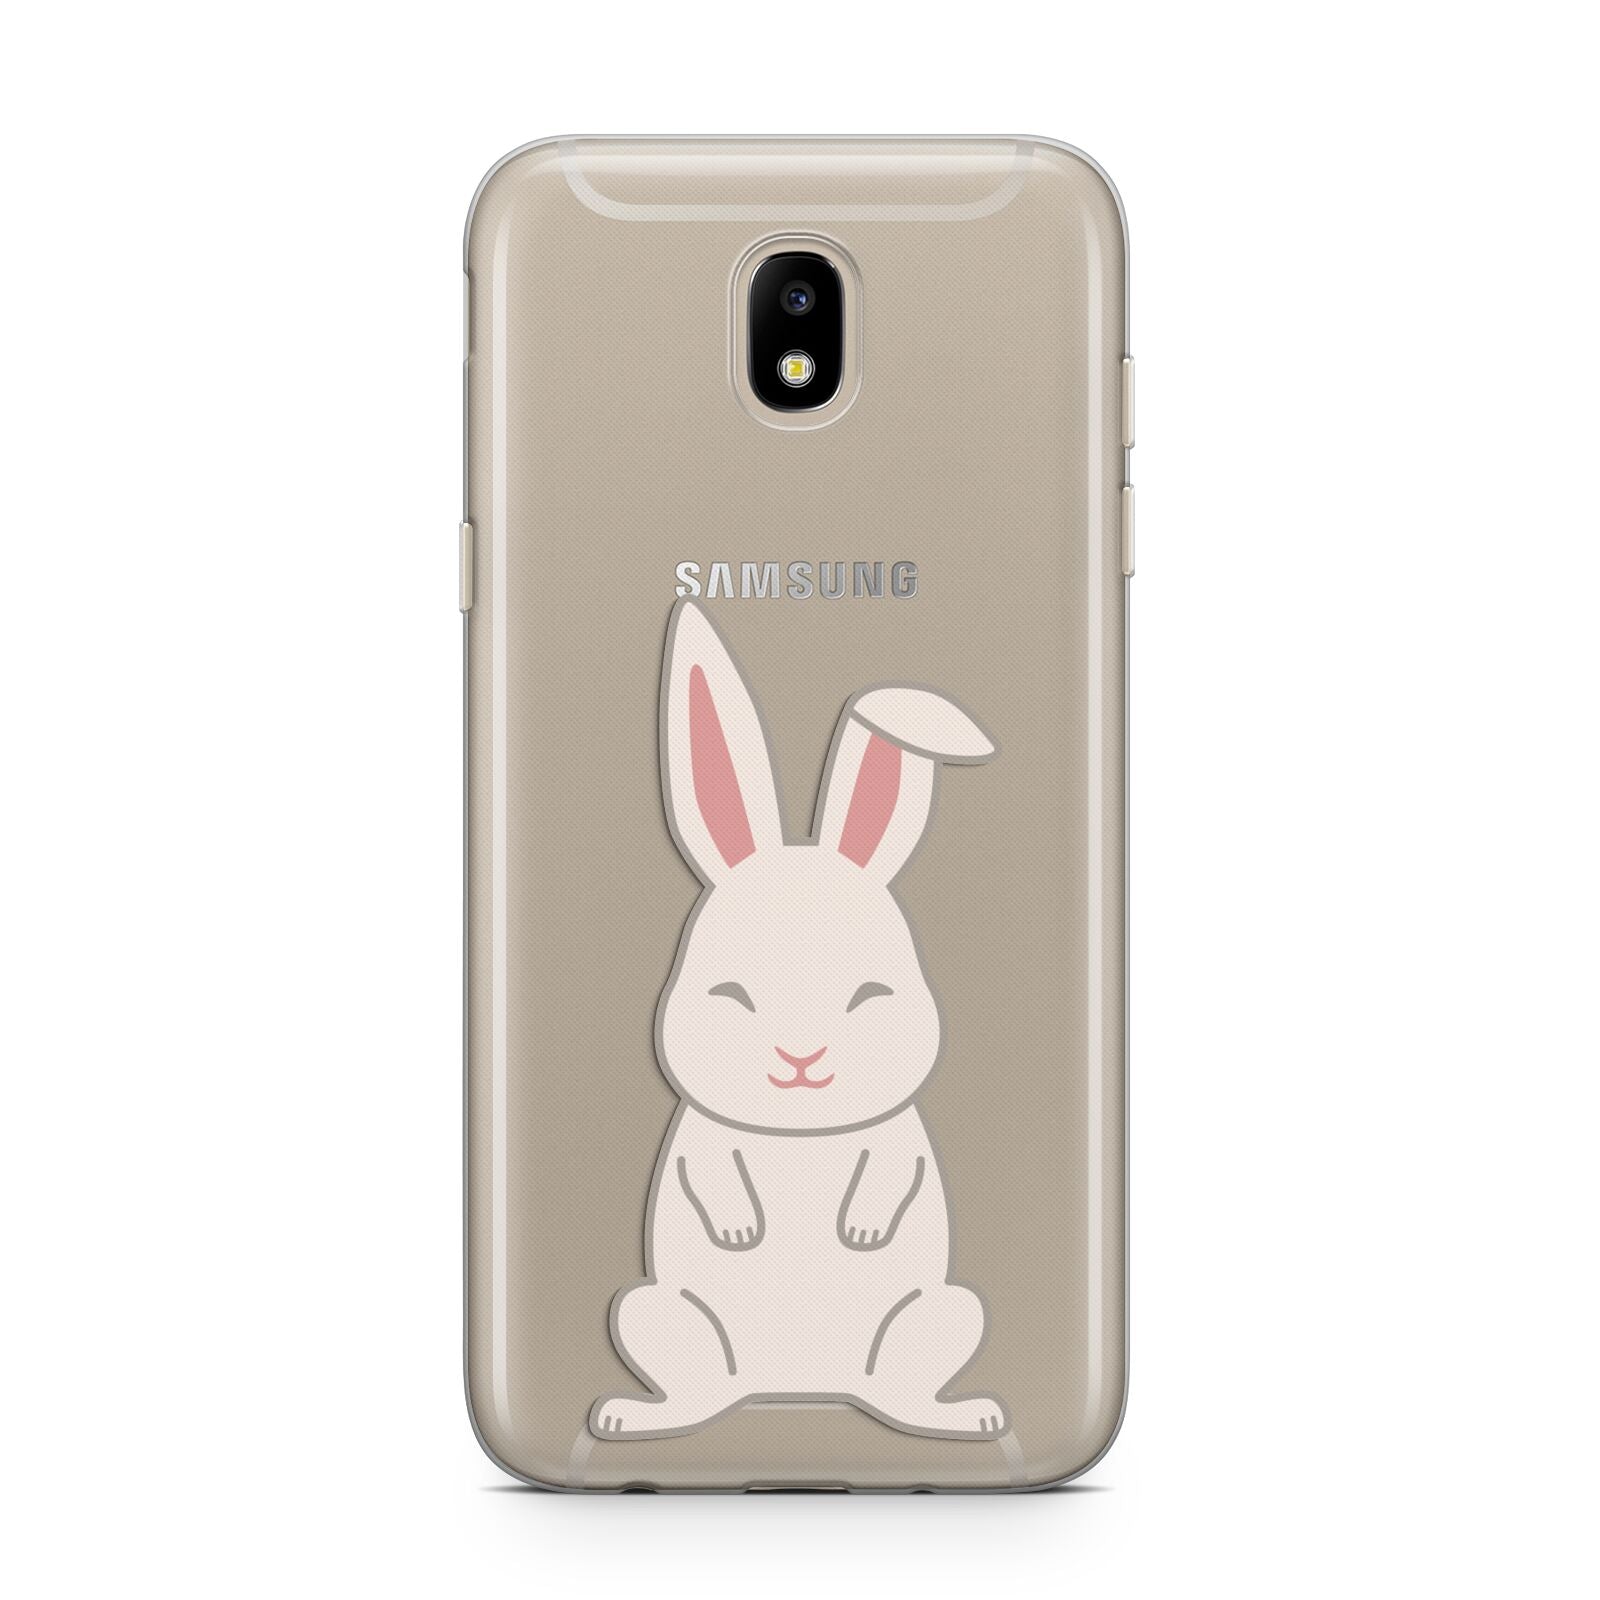 Bunny Samsung J5 2017 Case